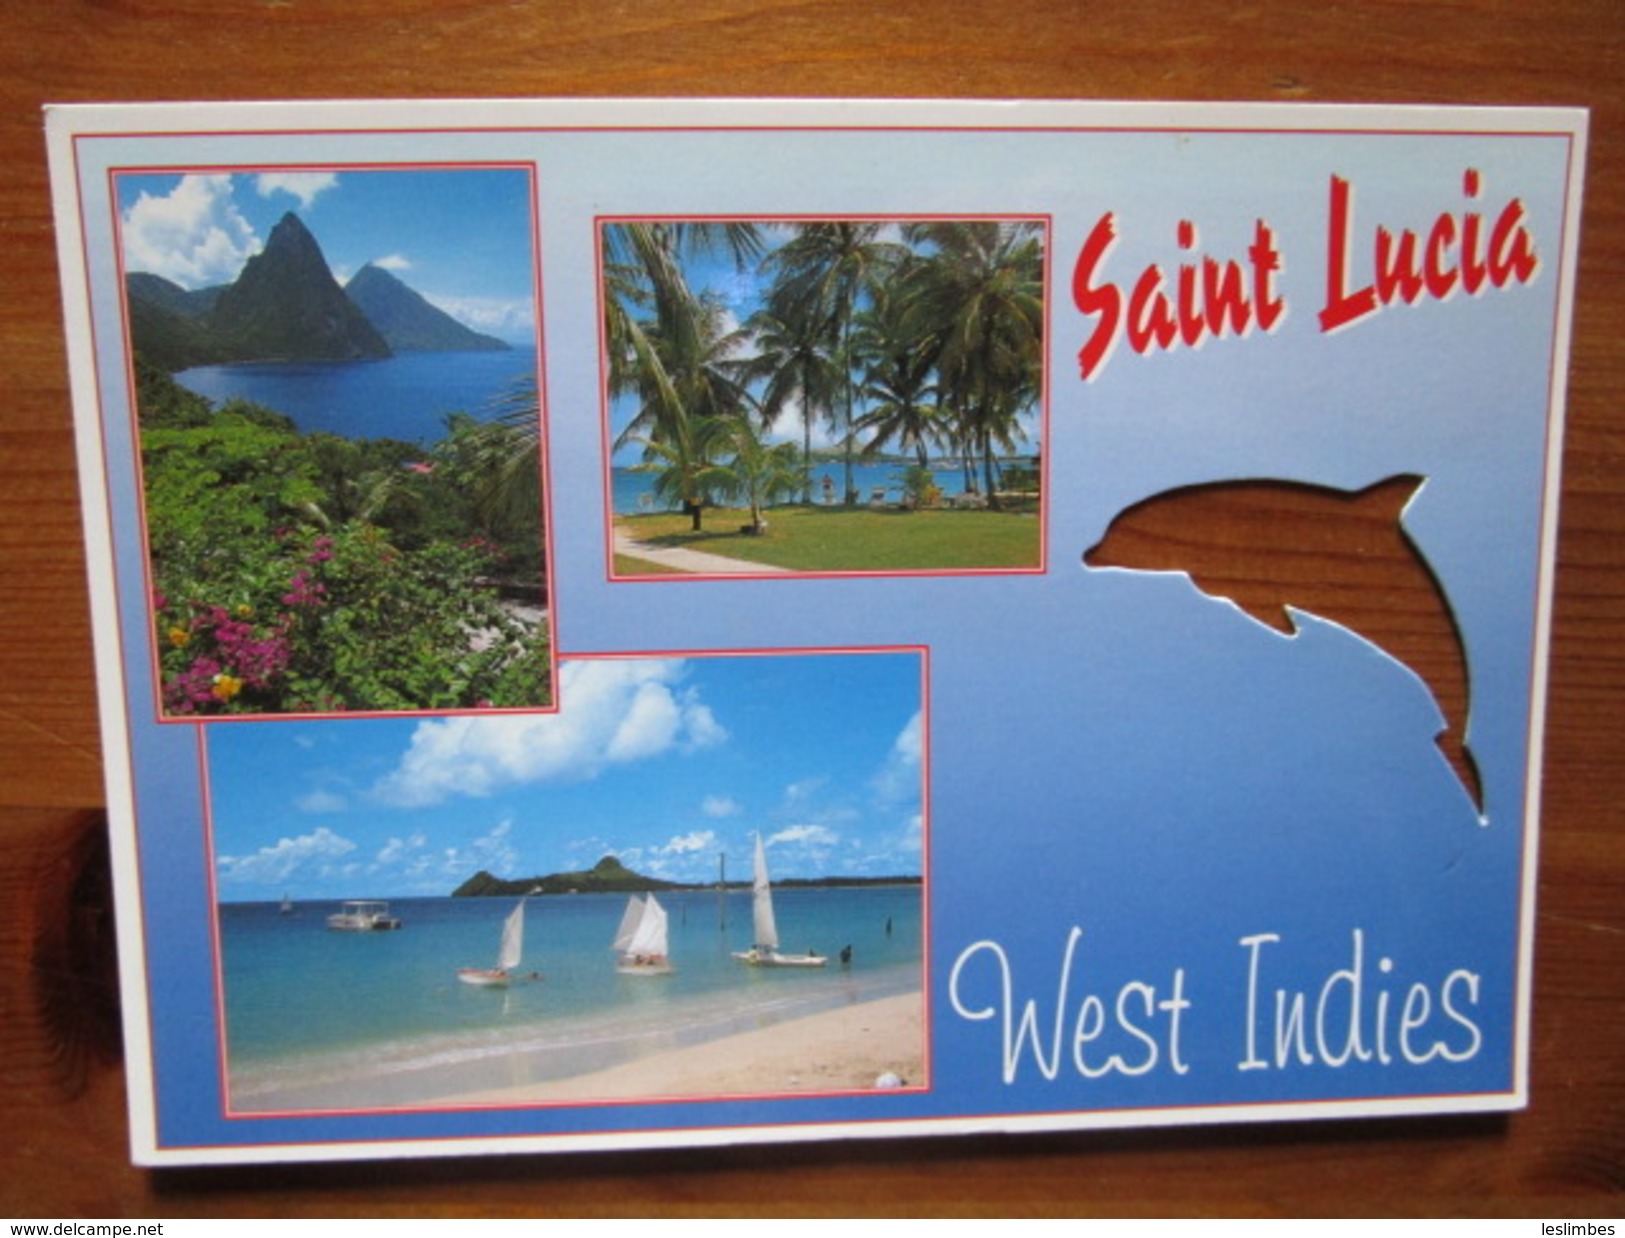 West Indies. Saint Lucia. - Santa Lucía